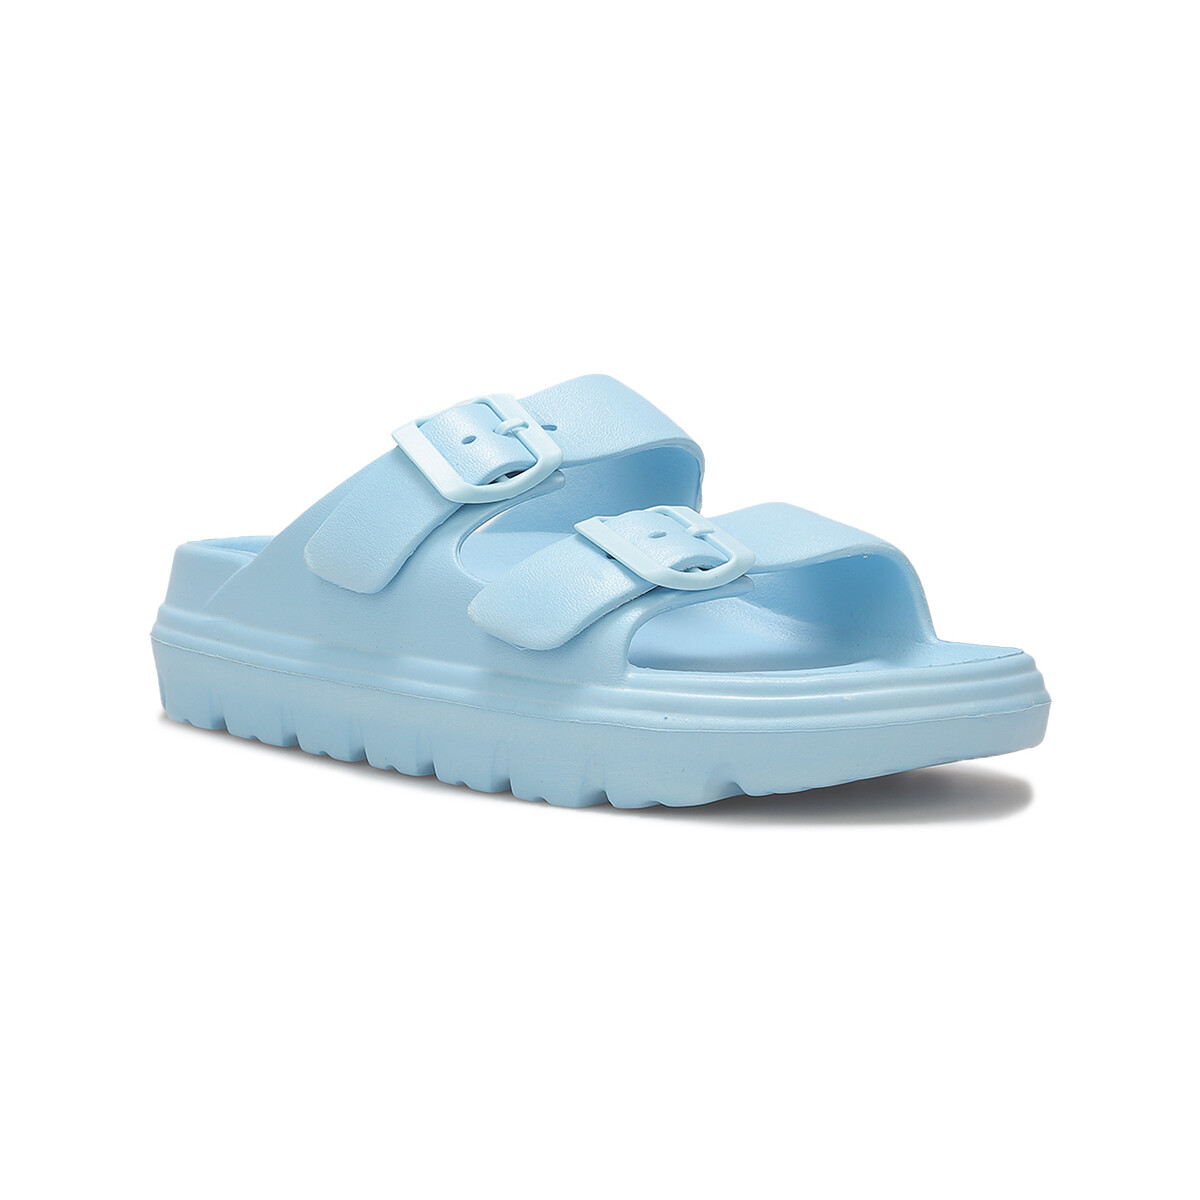 Schoenen Dames Slippers La Modeuse 70325_P164300 Blauw